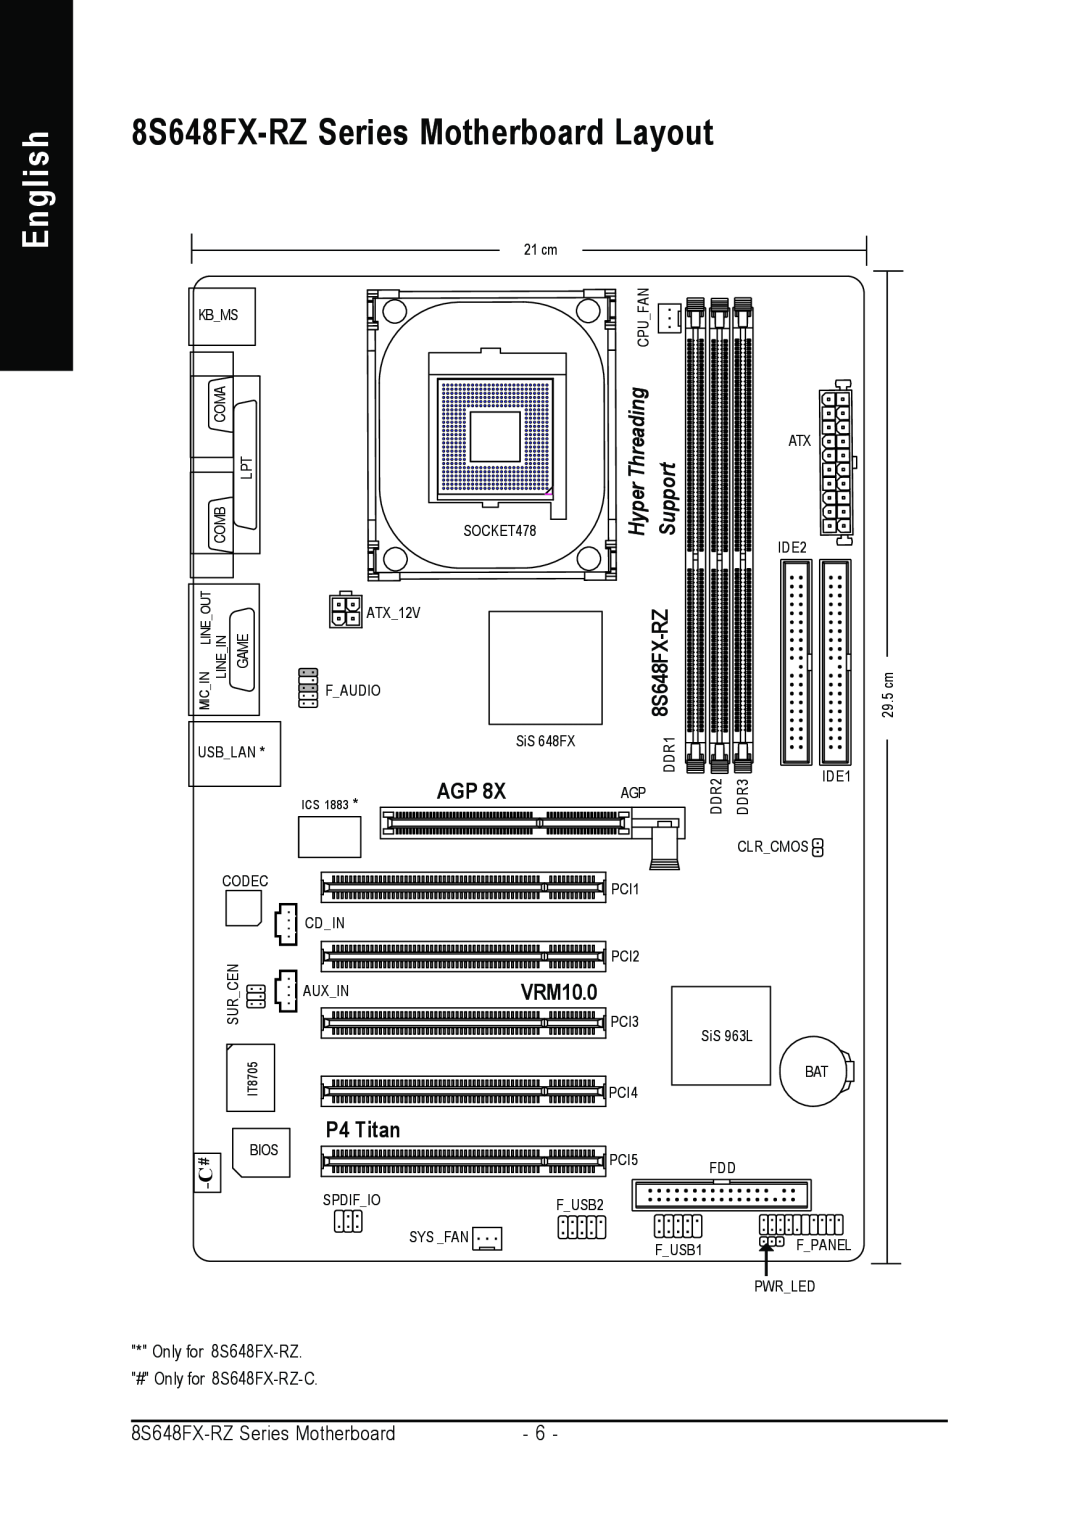 Gigabyte 8S648FX-RZ-C user manual 8S648FX-RZ Series Motherboard Layout, English, VRM10.0, P4 Titan, Hyper Threading Support 